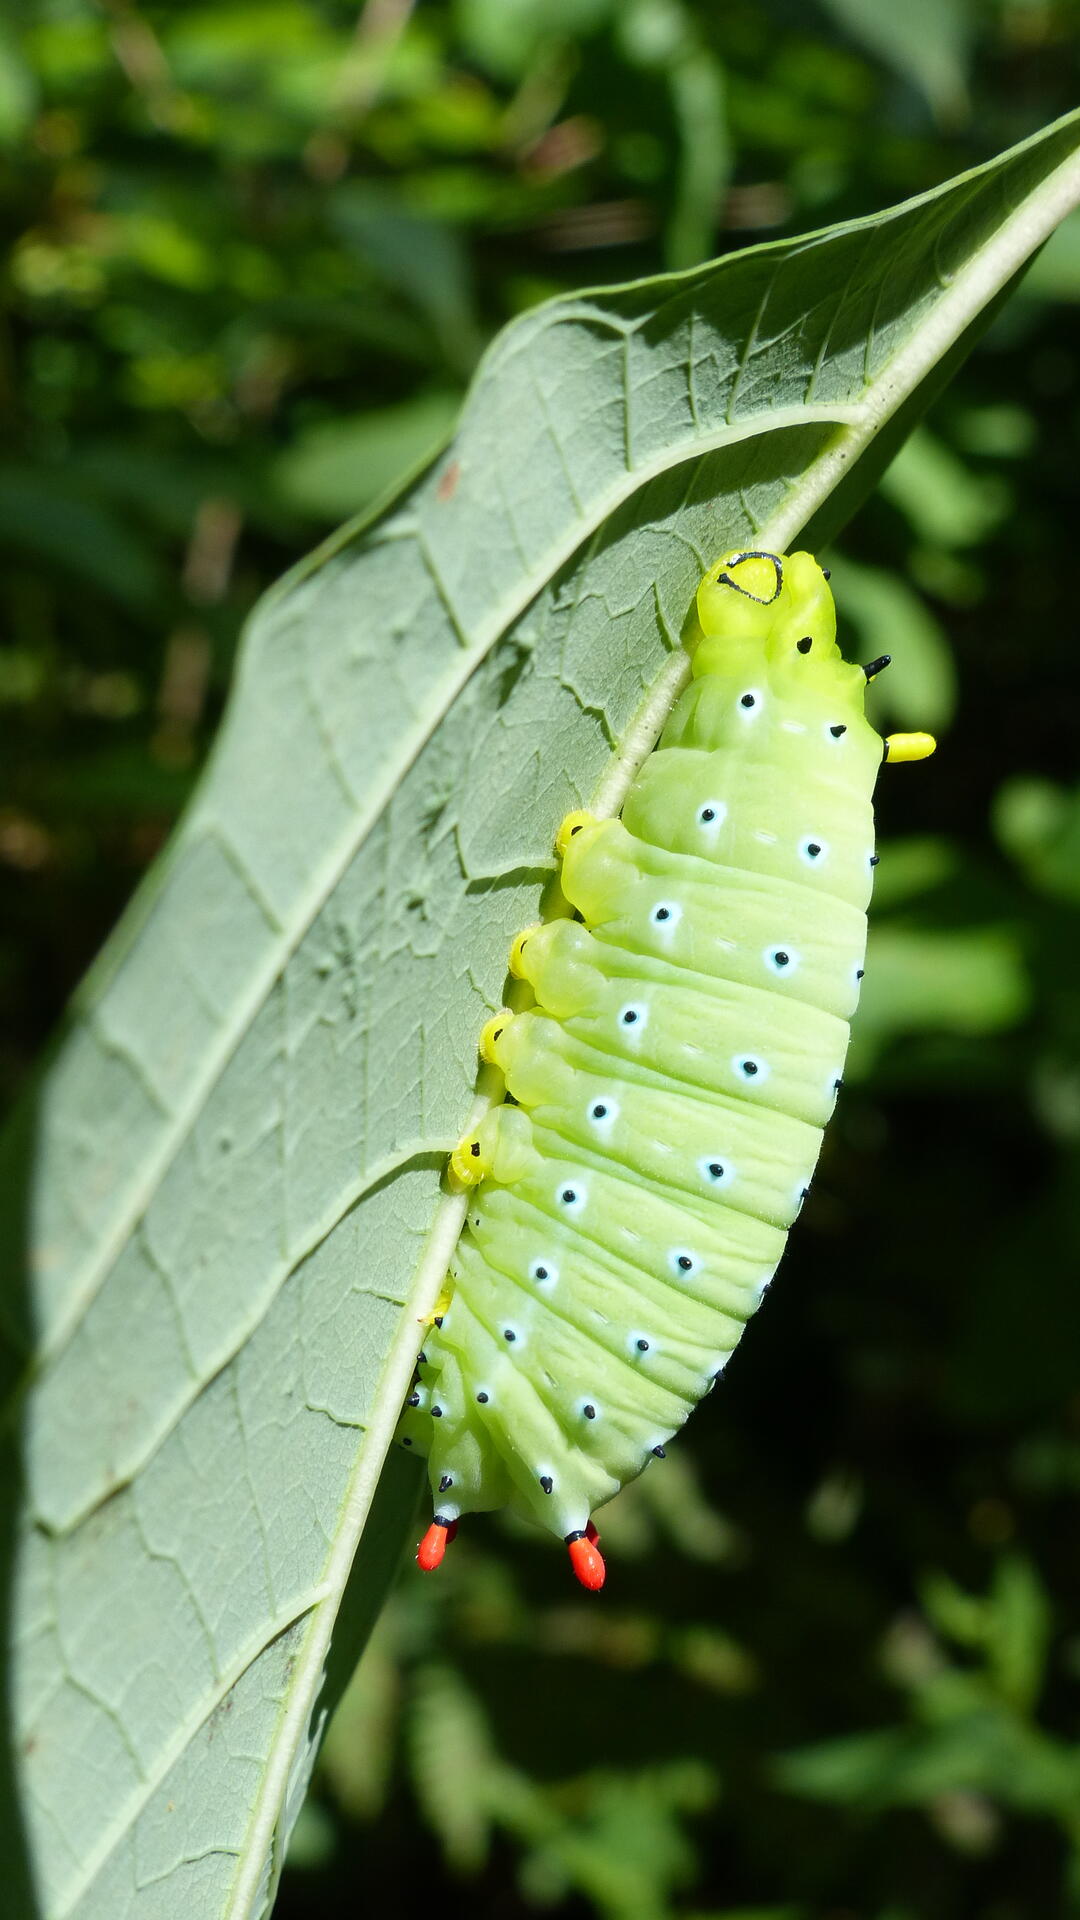 A Promethea caterpillar climbing a leaf.